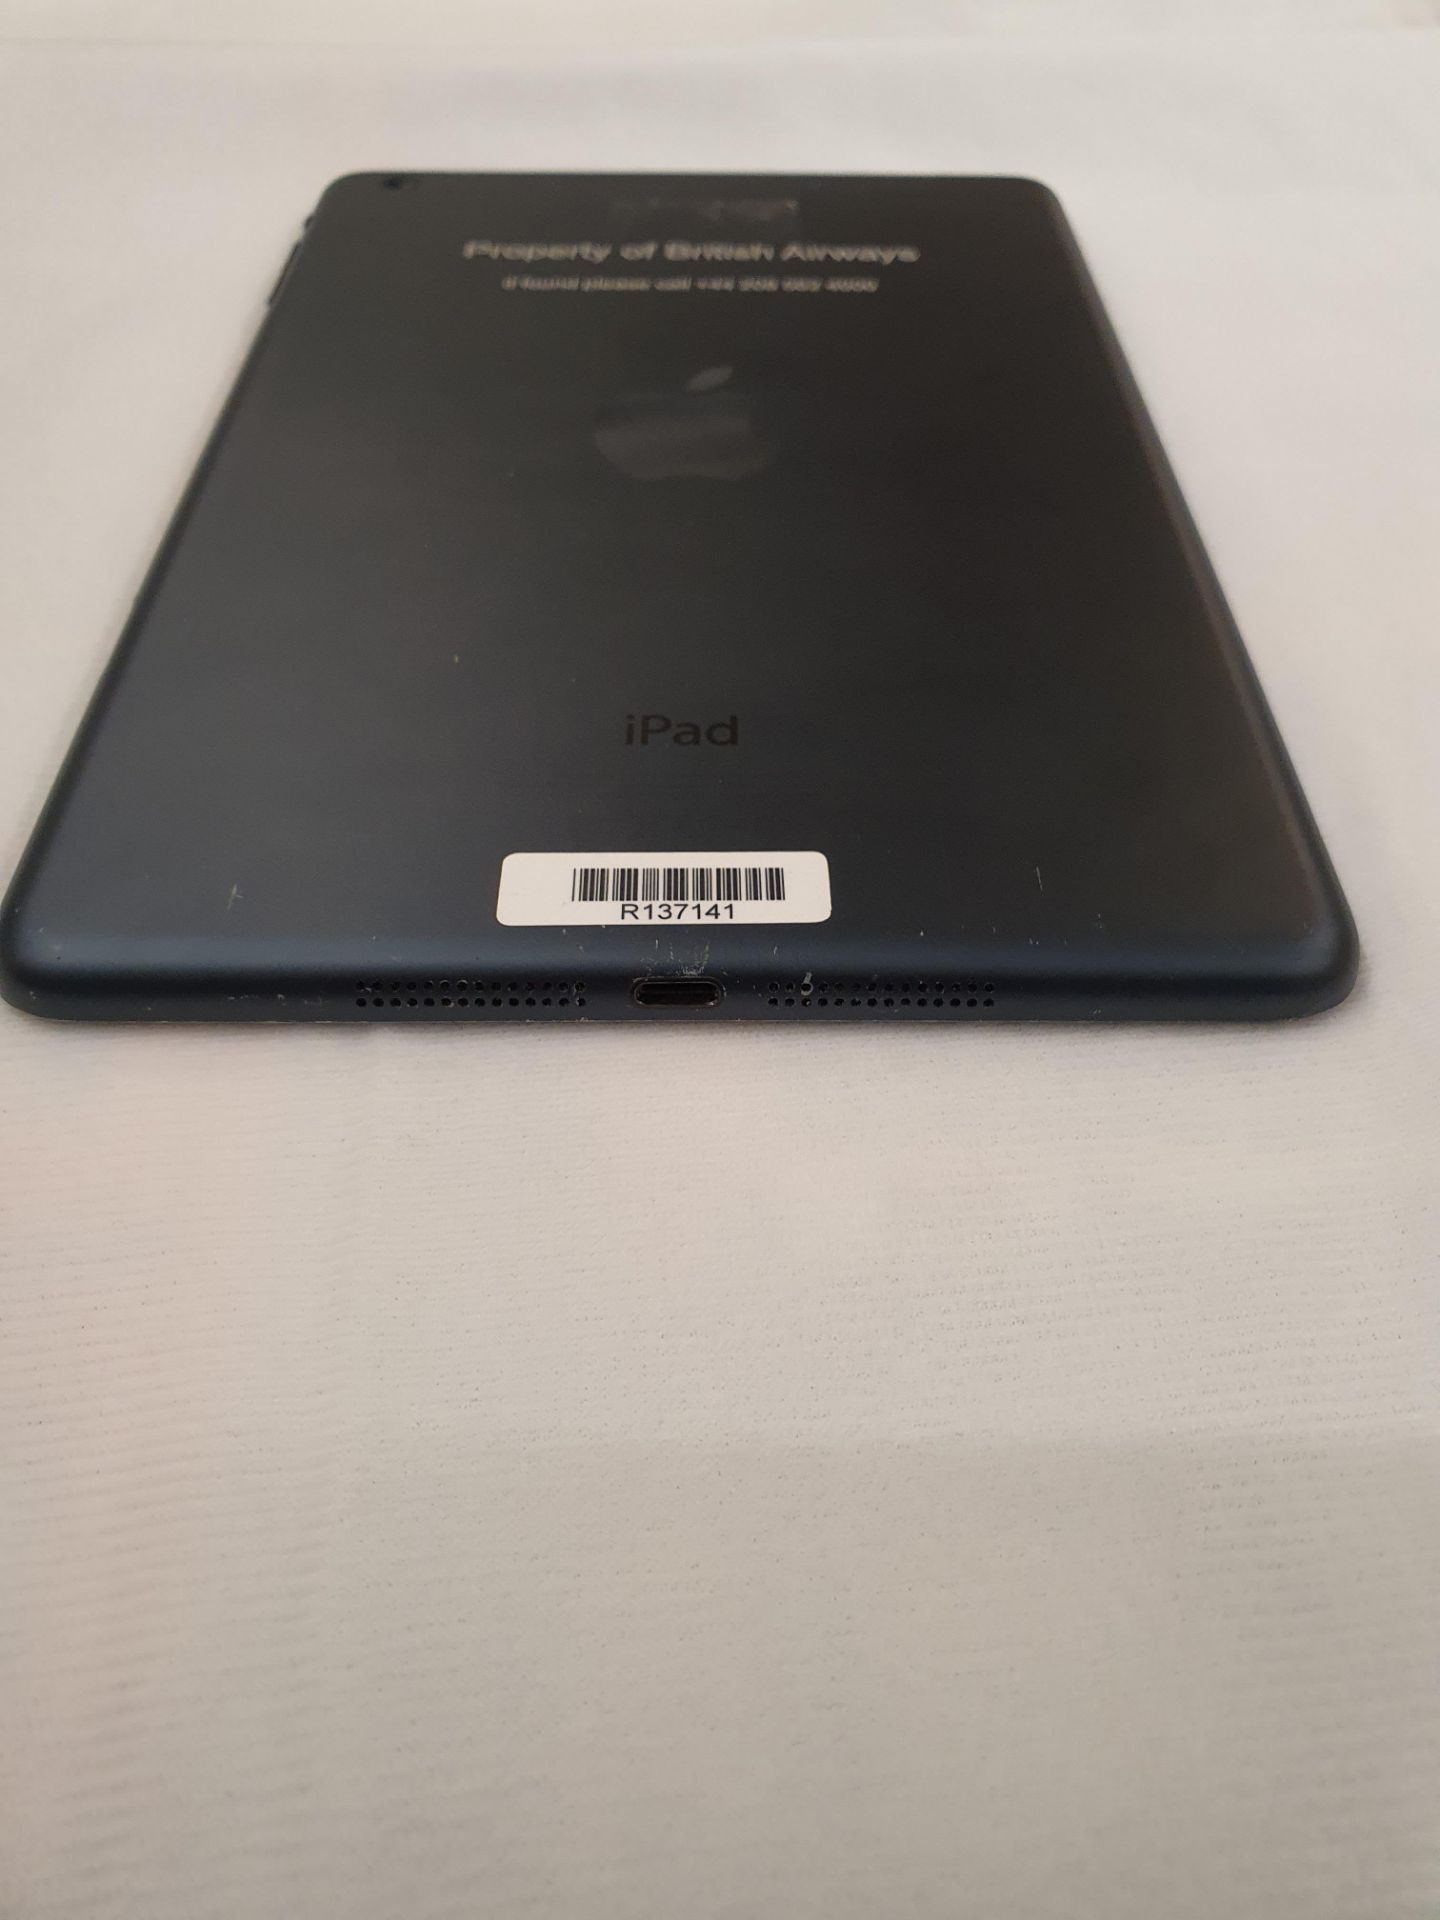 V Grade B Apple iPad Mini A1455 - Ex Lease (Has British Airways Engraving/Etching) - 16GB - Unit - Image 7 of 8